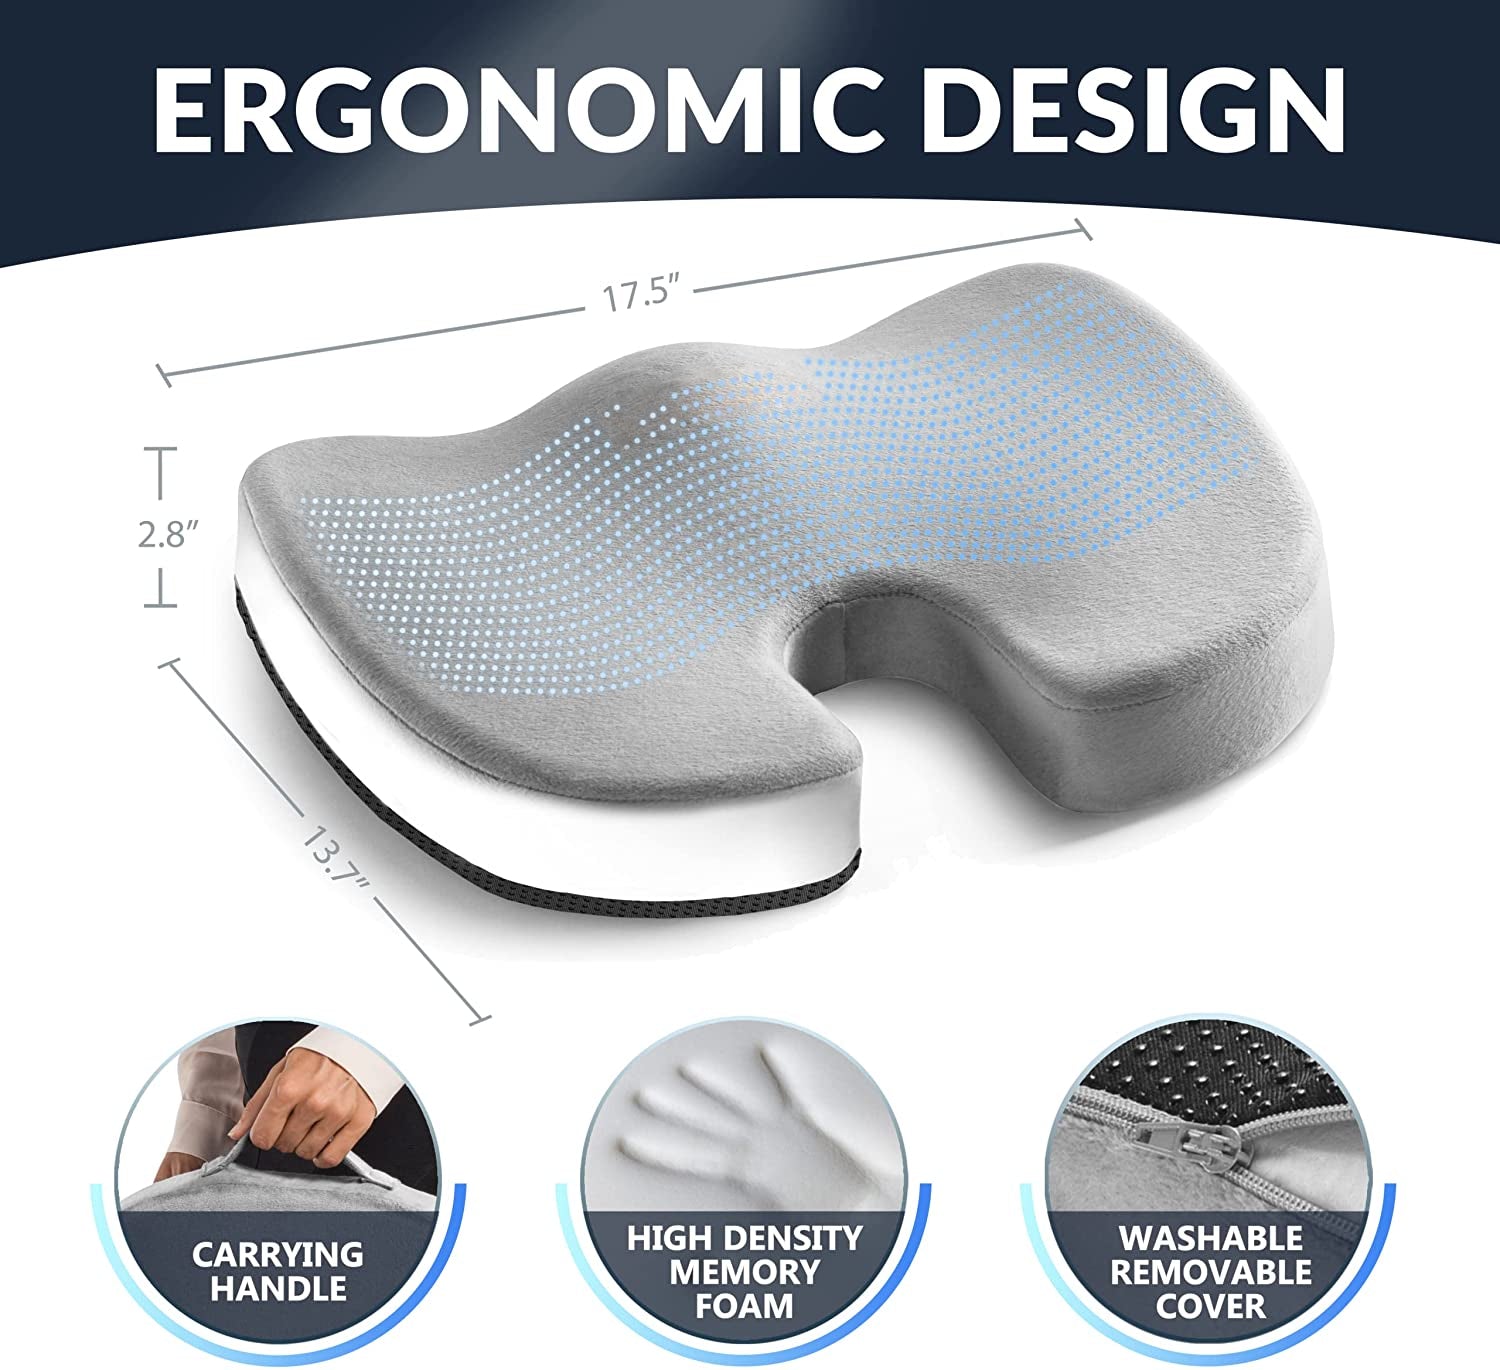 Node Gel-enhanced Memory Foam Seat Cushion, Black Velour Ergonomic